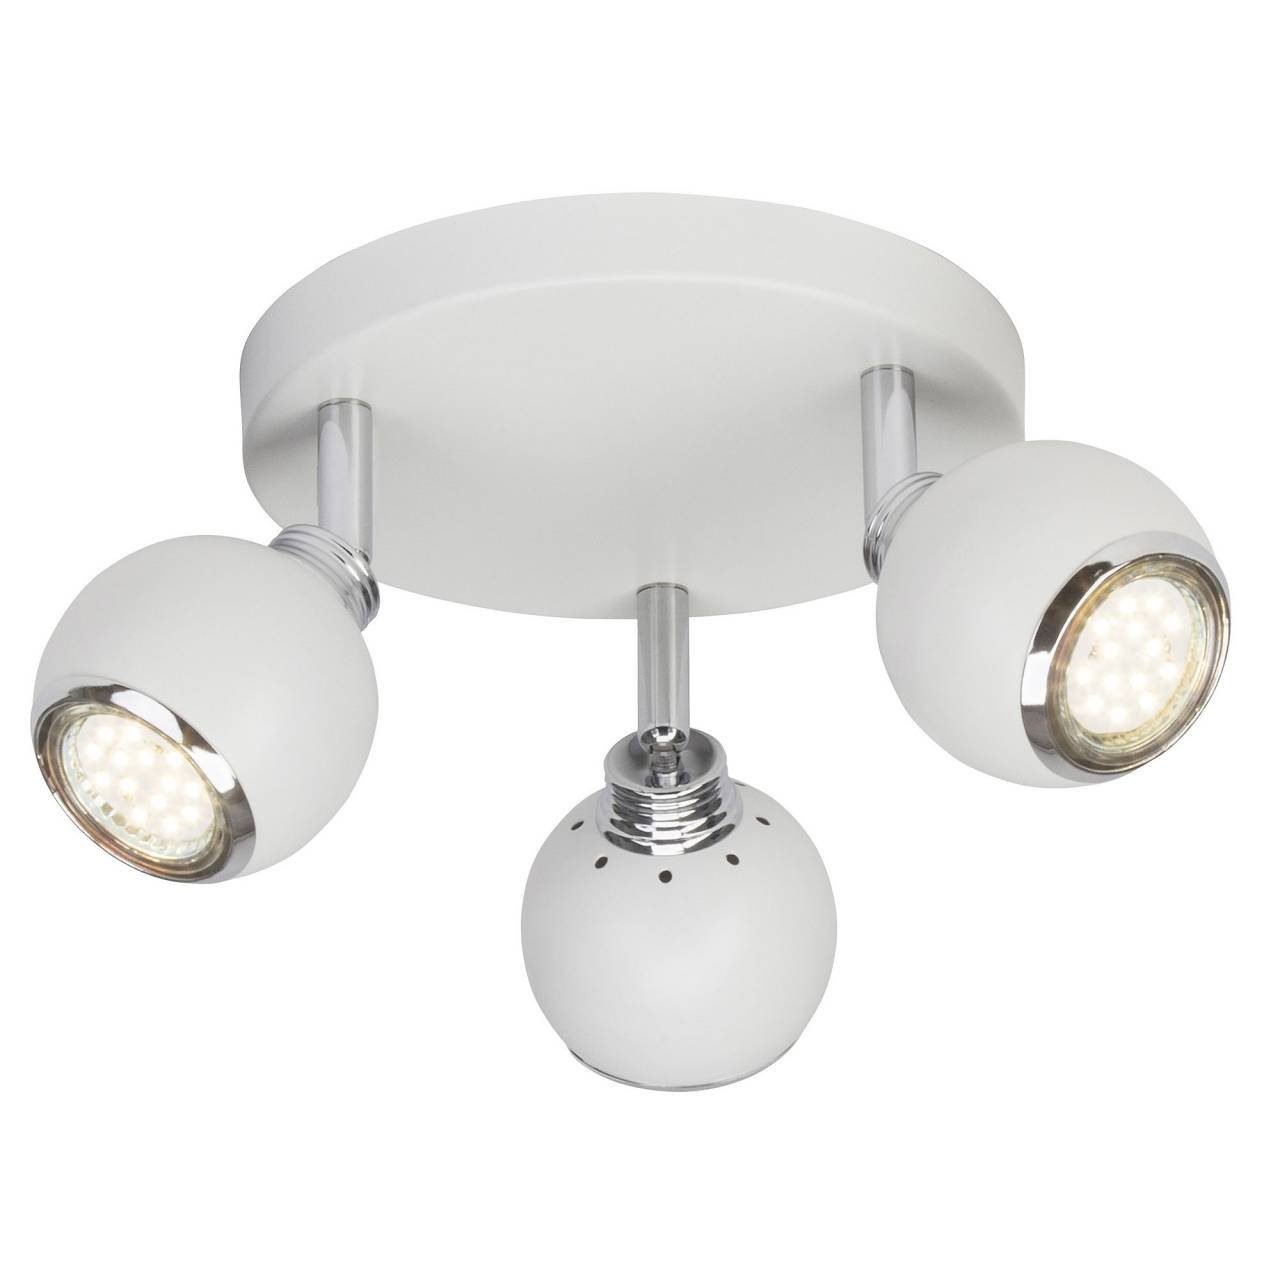 Brilliant Deckenleuchte Ina, weiß/chrom Lampe LED-PAR51, 3flg 3x LED Spotrondell 3W LED 3000K, GU10, Ina